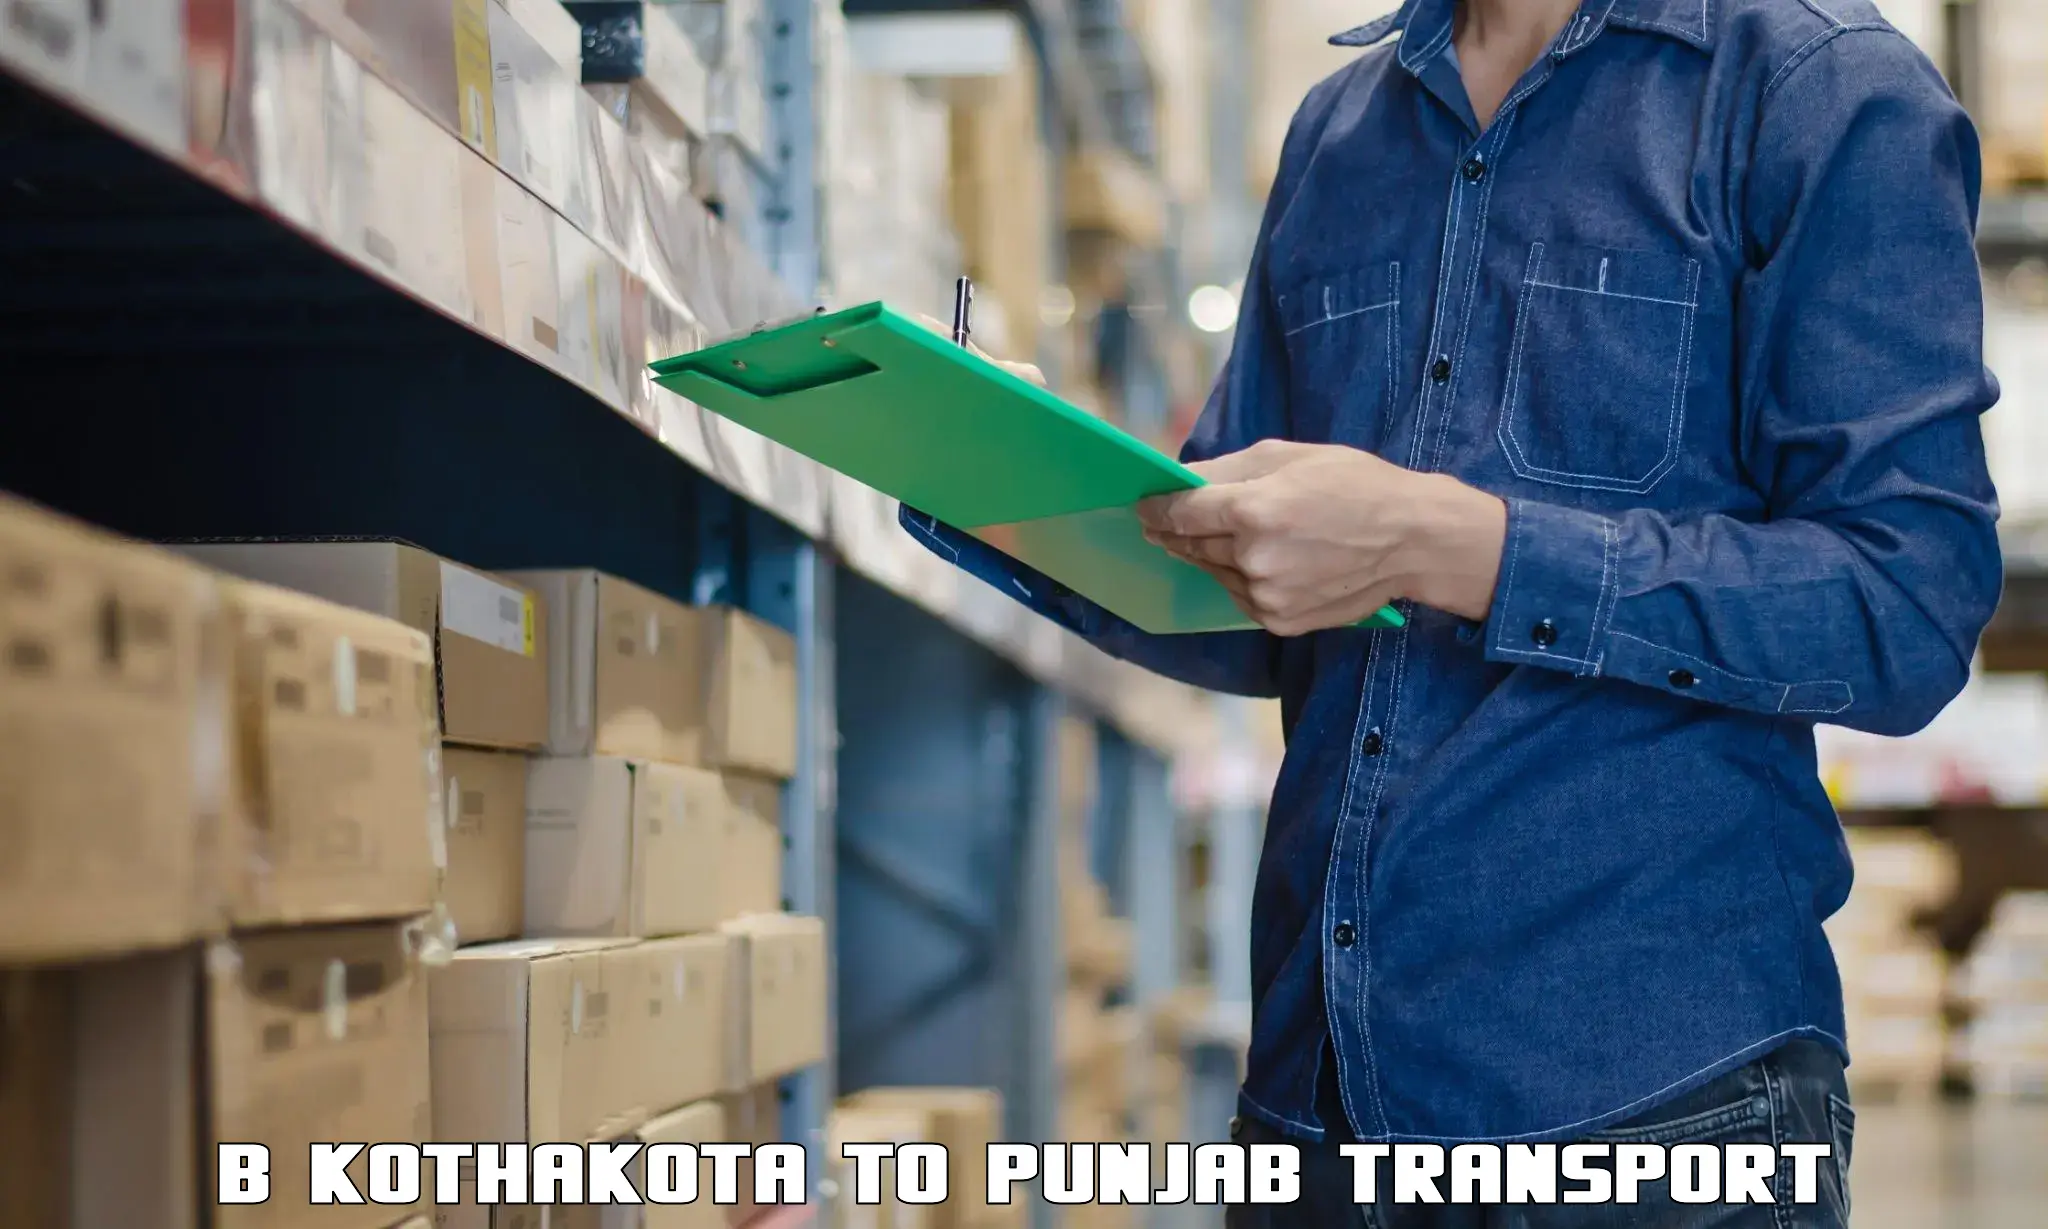 Pick up transport service B Kothakota to Dhilwan